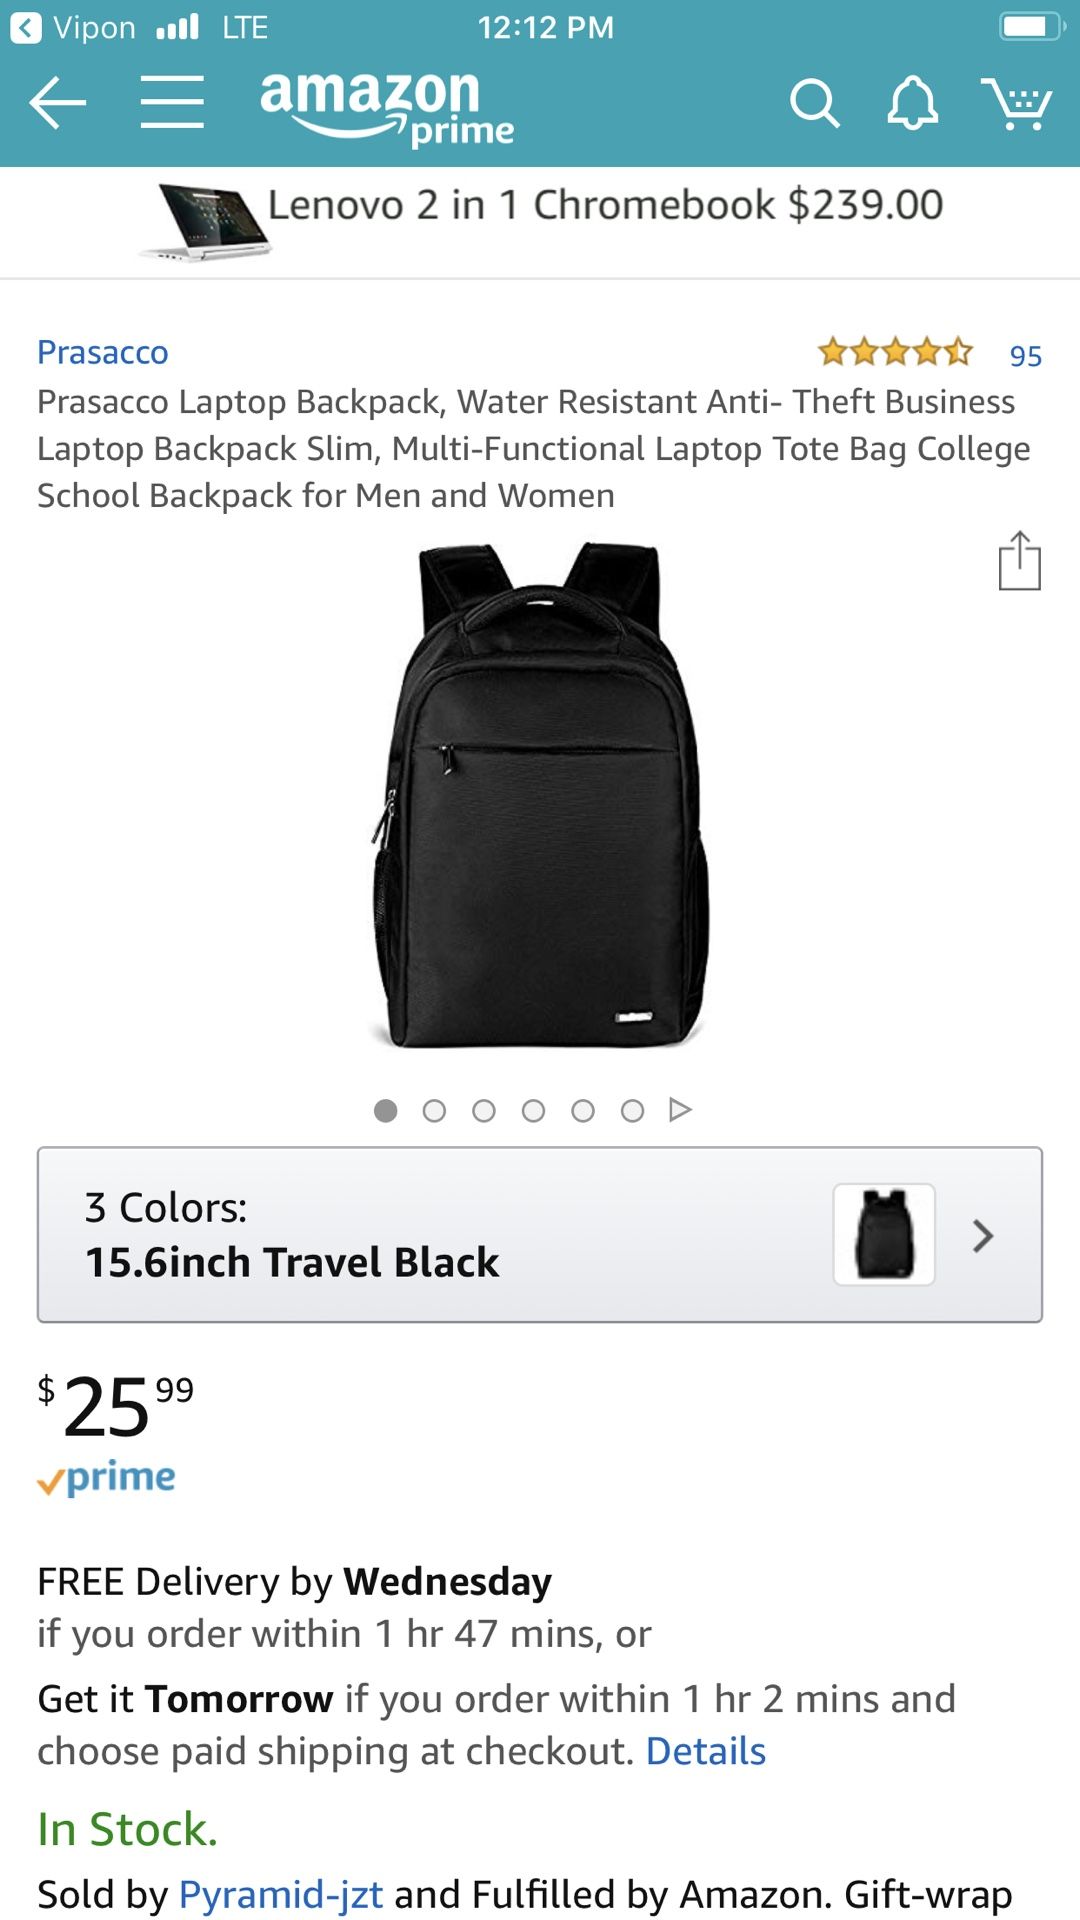 Prasacco Laptop Backpack, Water Resistant Anti- Theft Business Laptop Backpack Slim, Multi-Functional Laptop Tote Bag College School Backpack